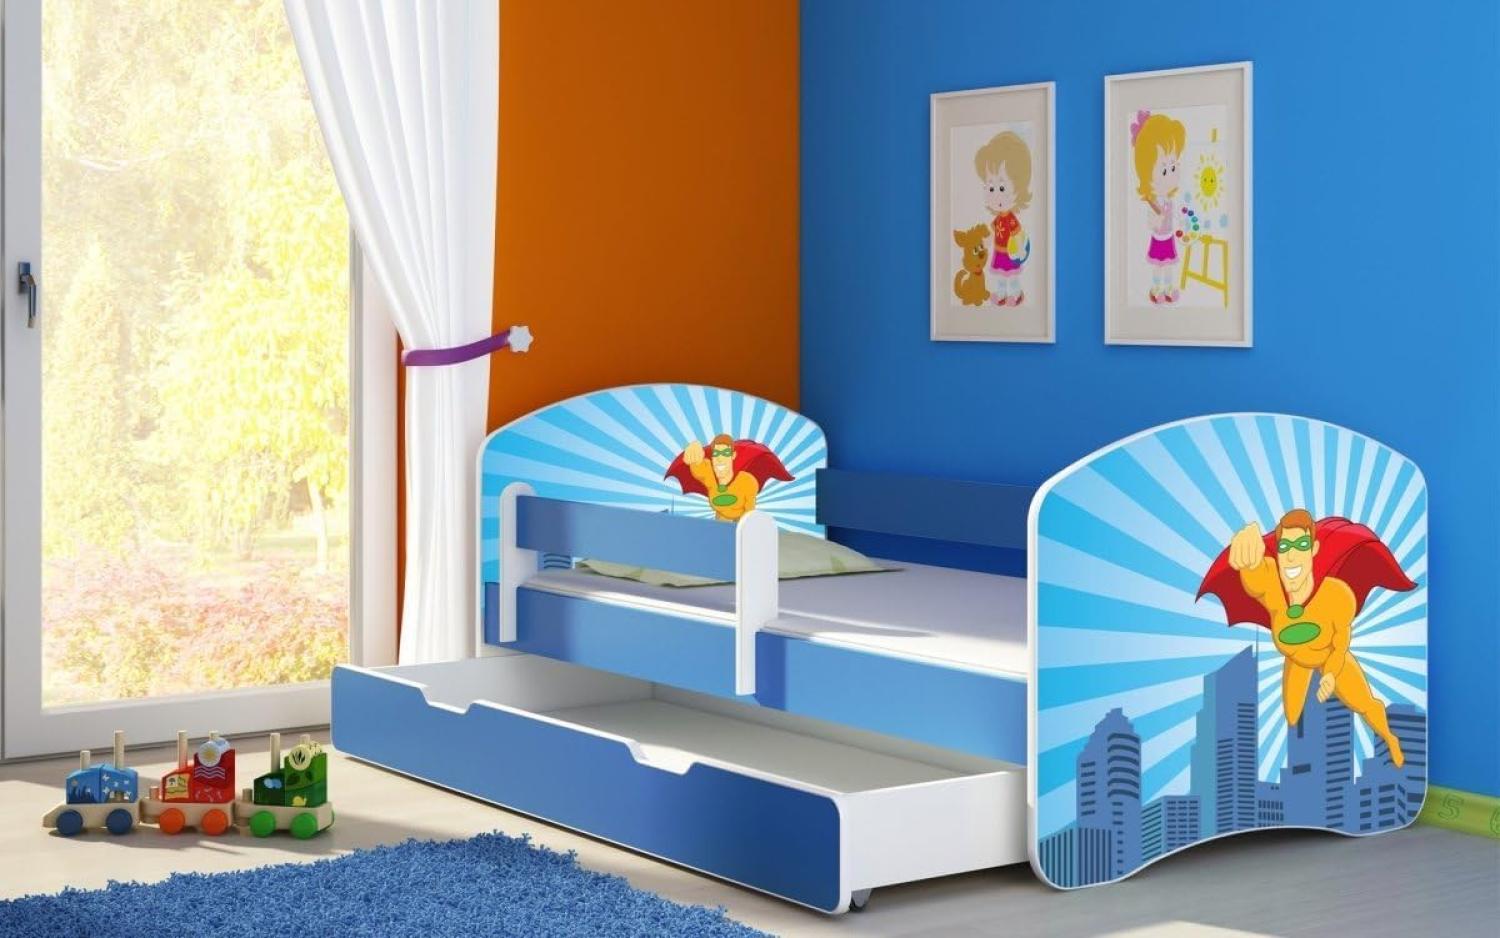 Kinderbett Dream mit verschiedenen Motiven 180x80 Hero Bild 1